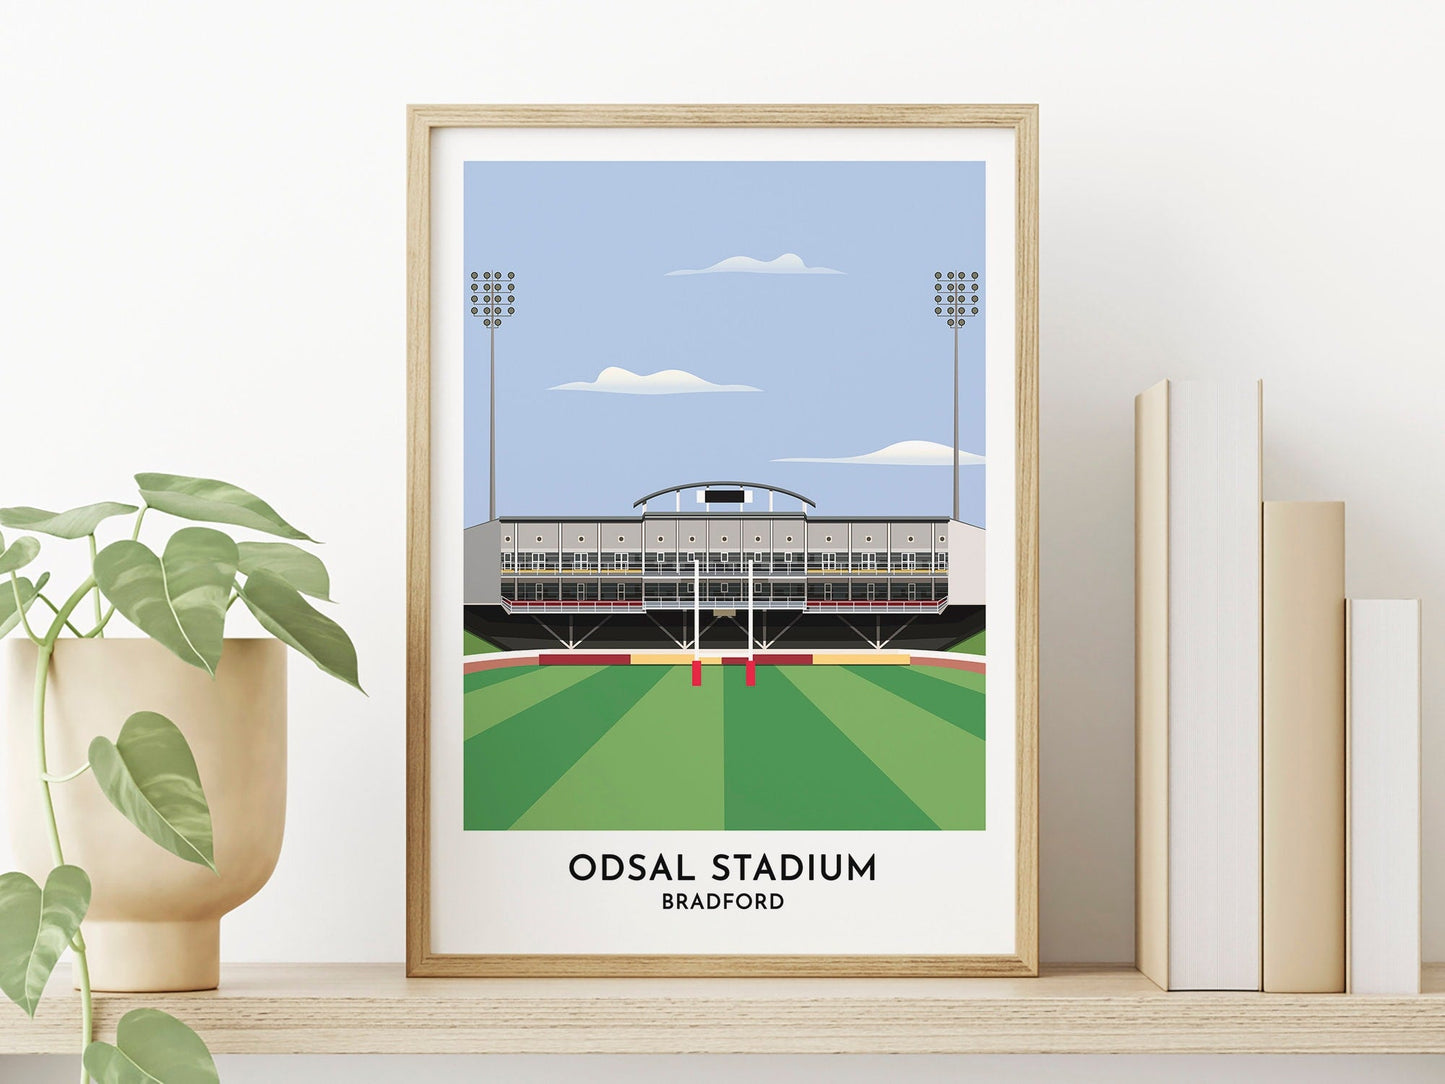 Bradford Rugby League Print Gift - Odsal Stadium Contemporary Artwork Poster - Rugby Fan Gift Idea - Turf Football Art